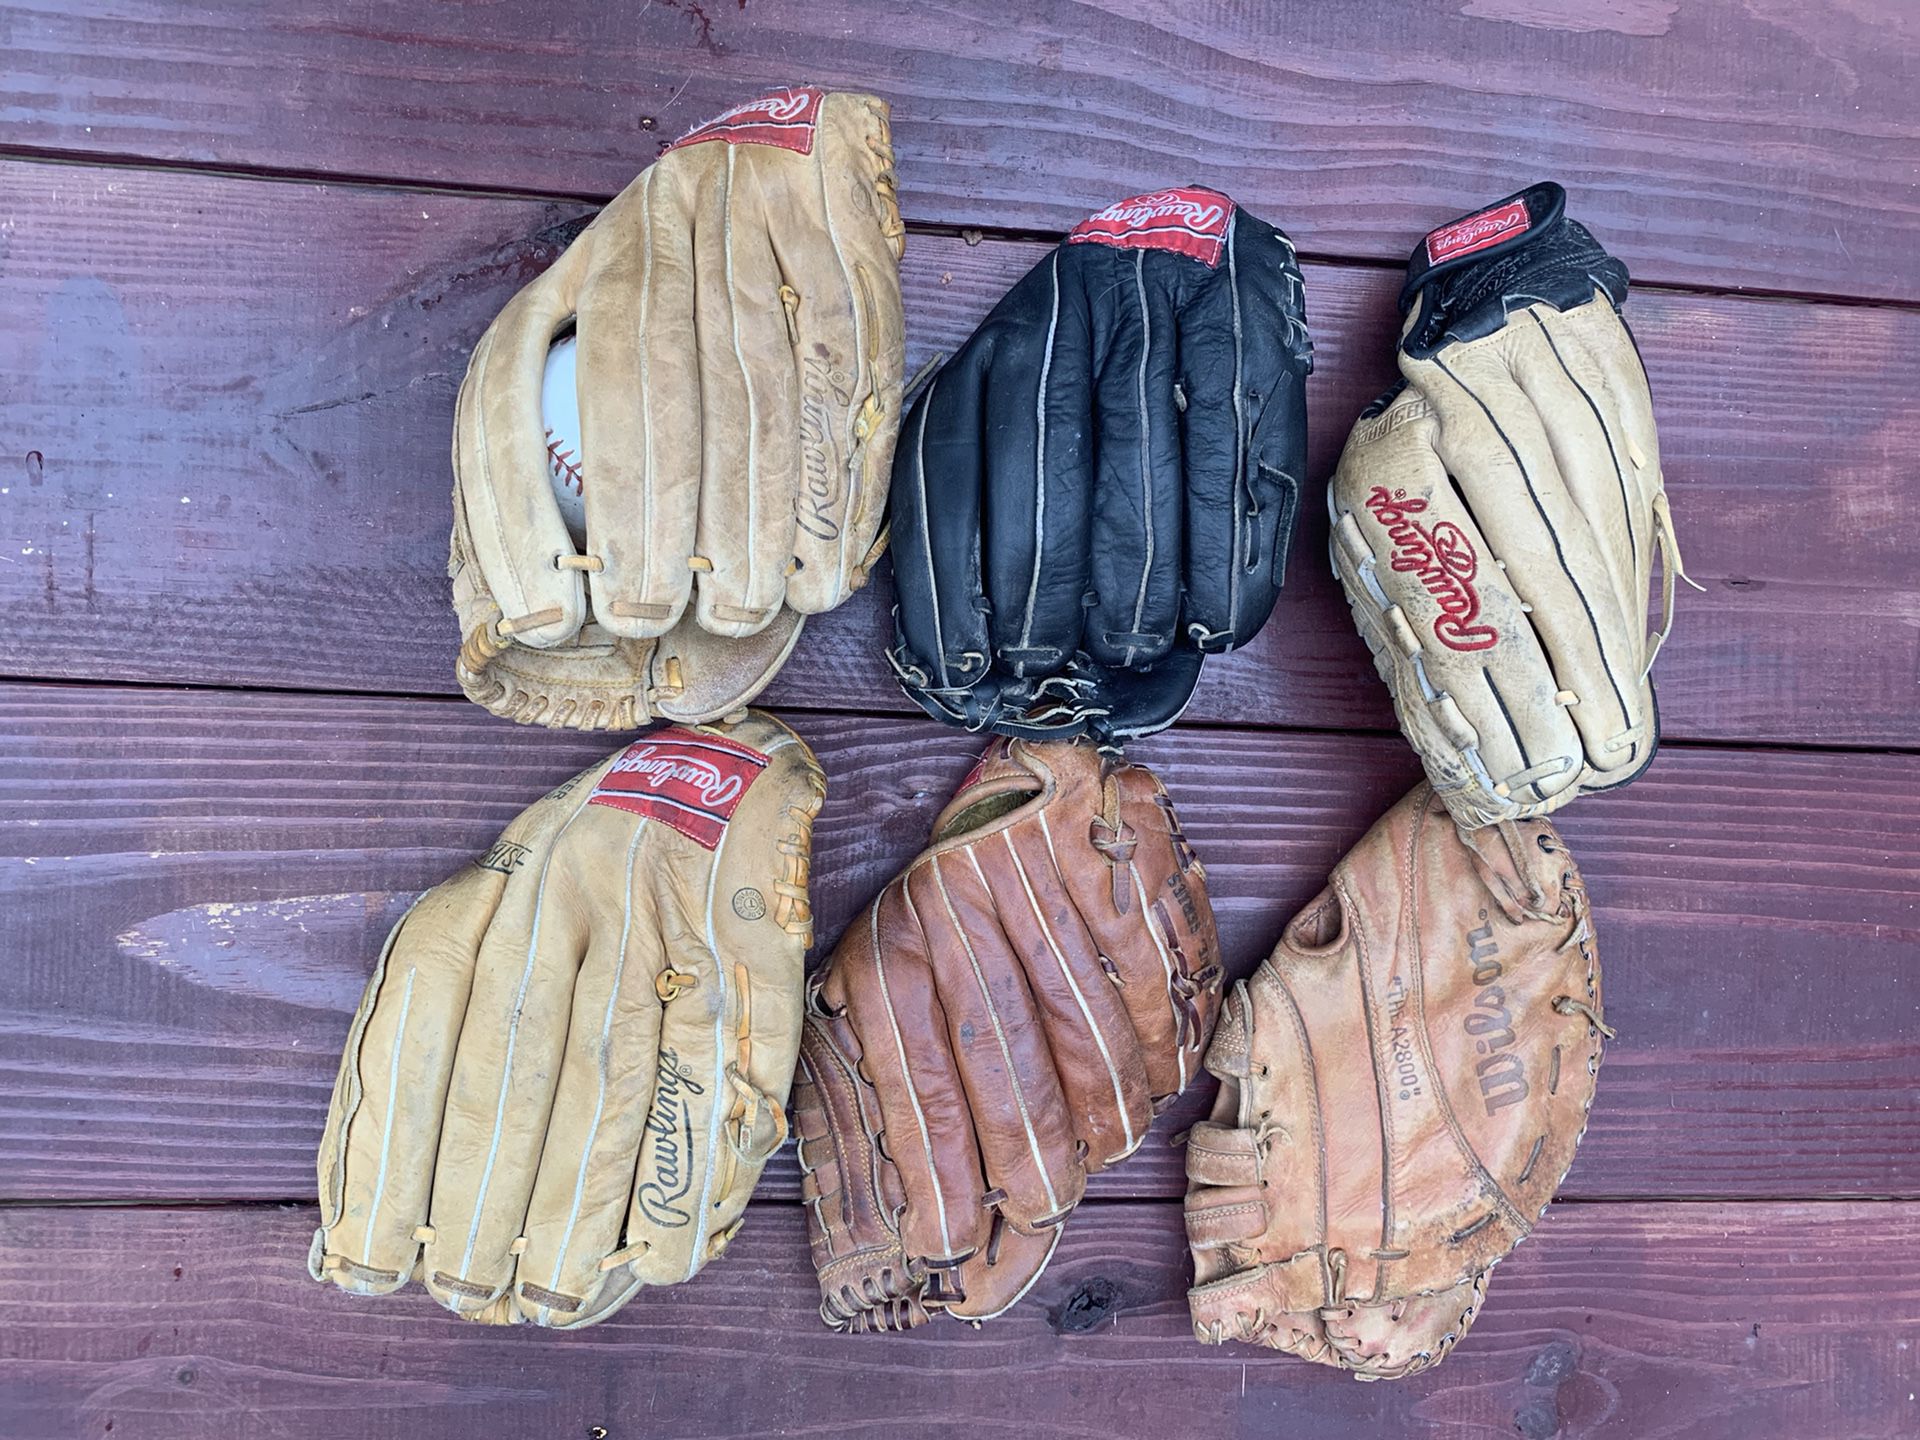 Rawlings baseball or softball gloves